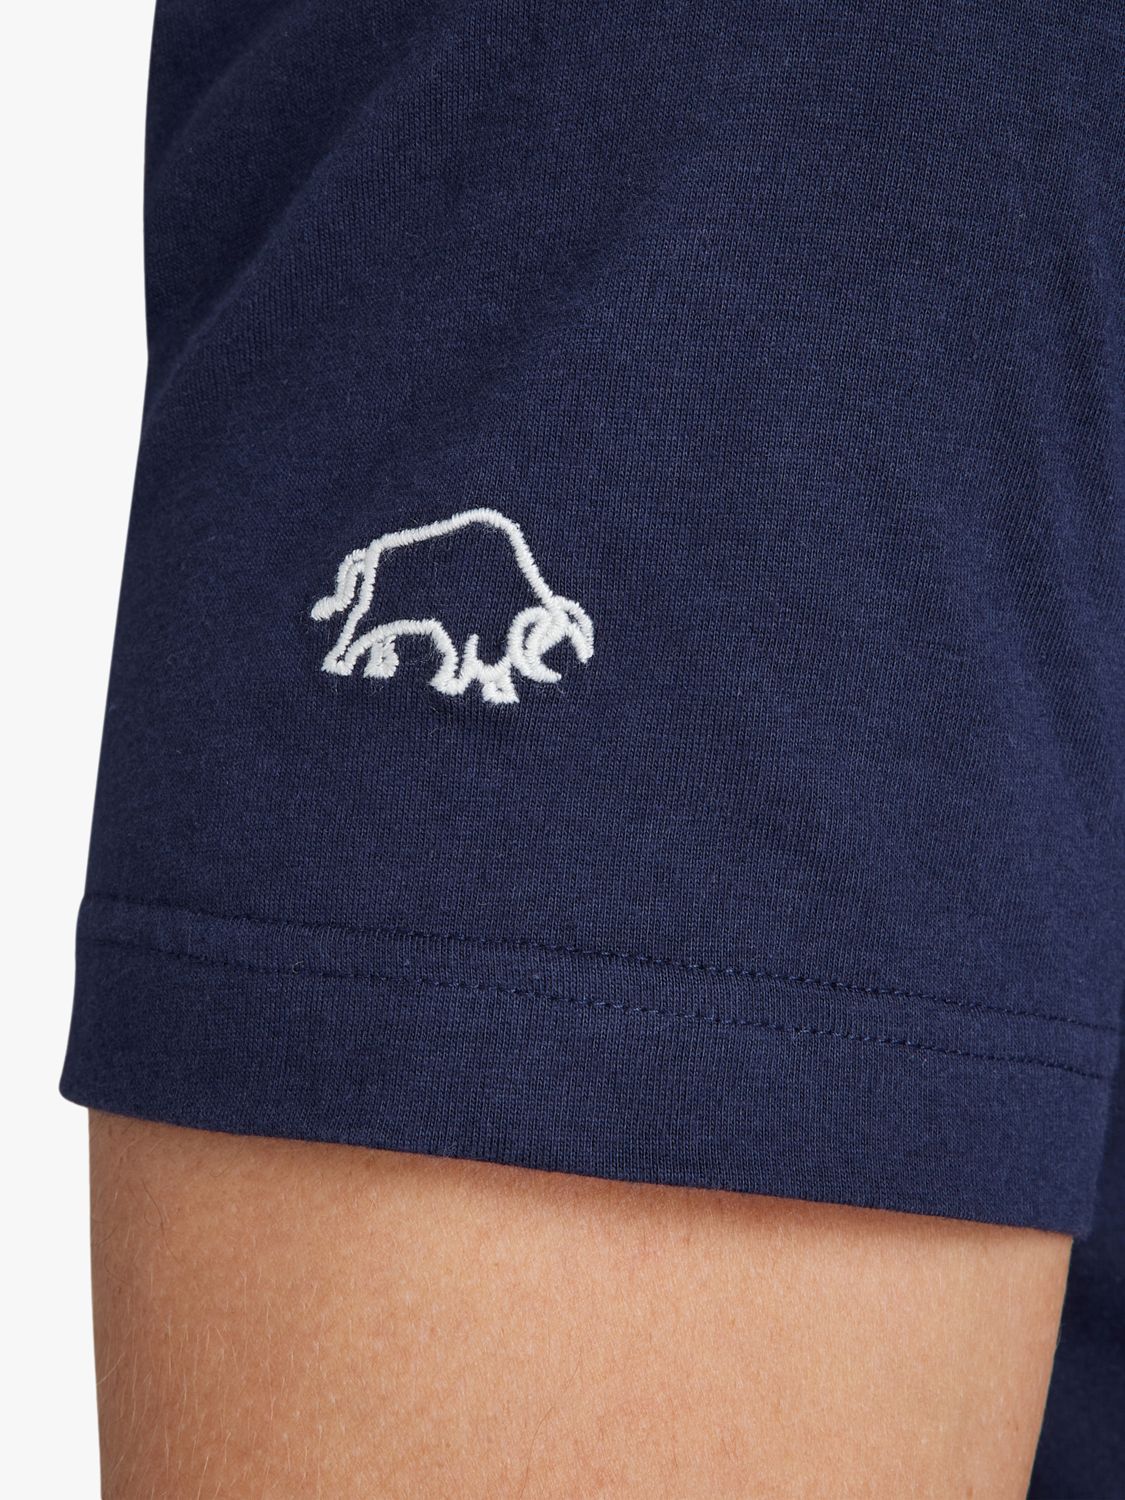 Buy Raging Bull Sign Post T-Shirt, Navy Online at johnlewis.com